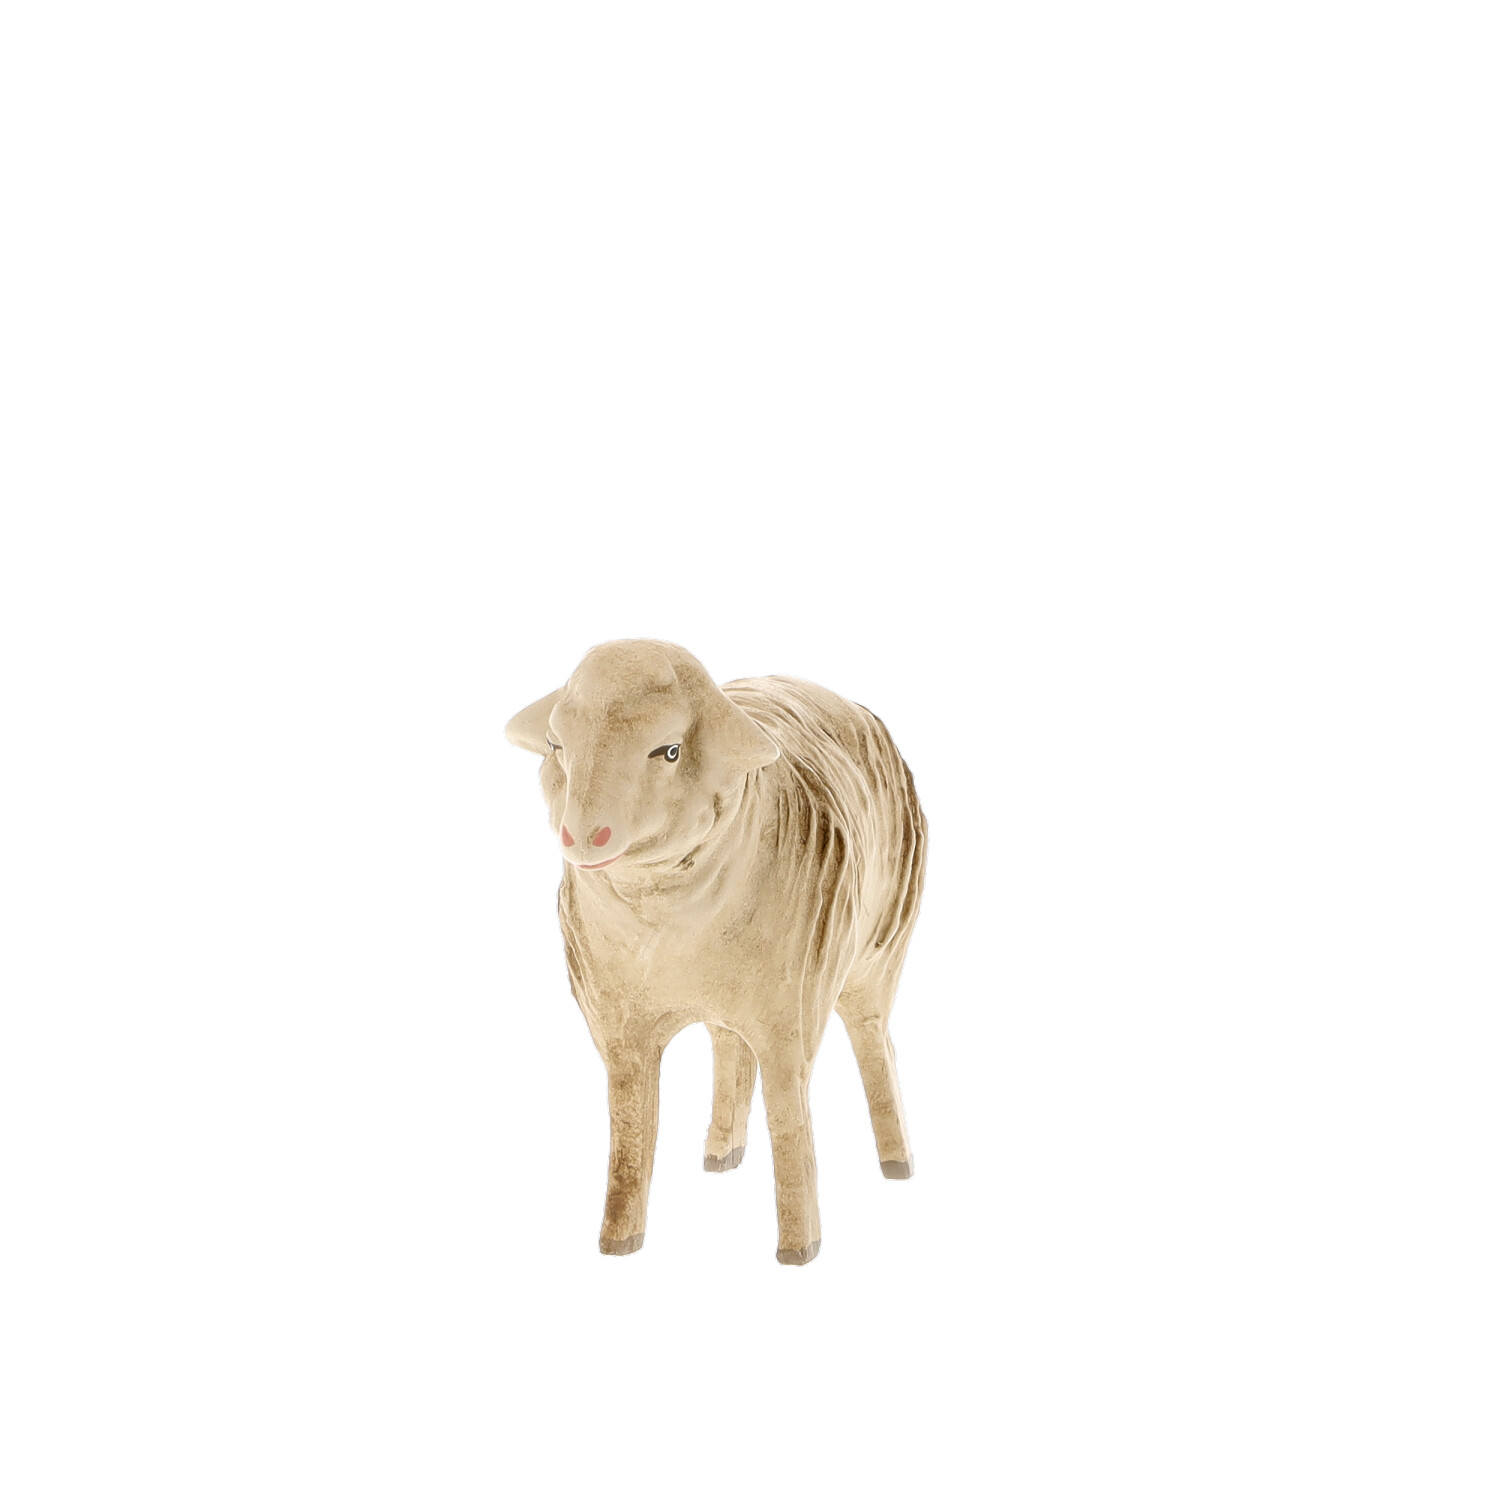 Standing sheep - Marolin Nativity figure - made in Germany